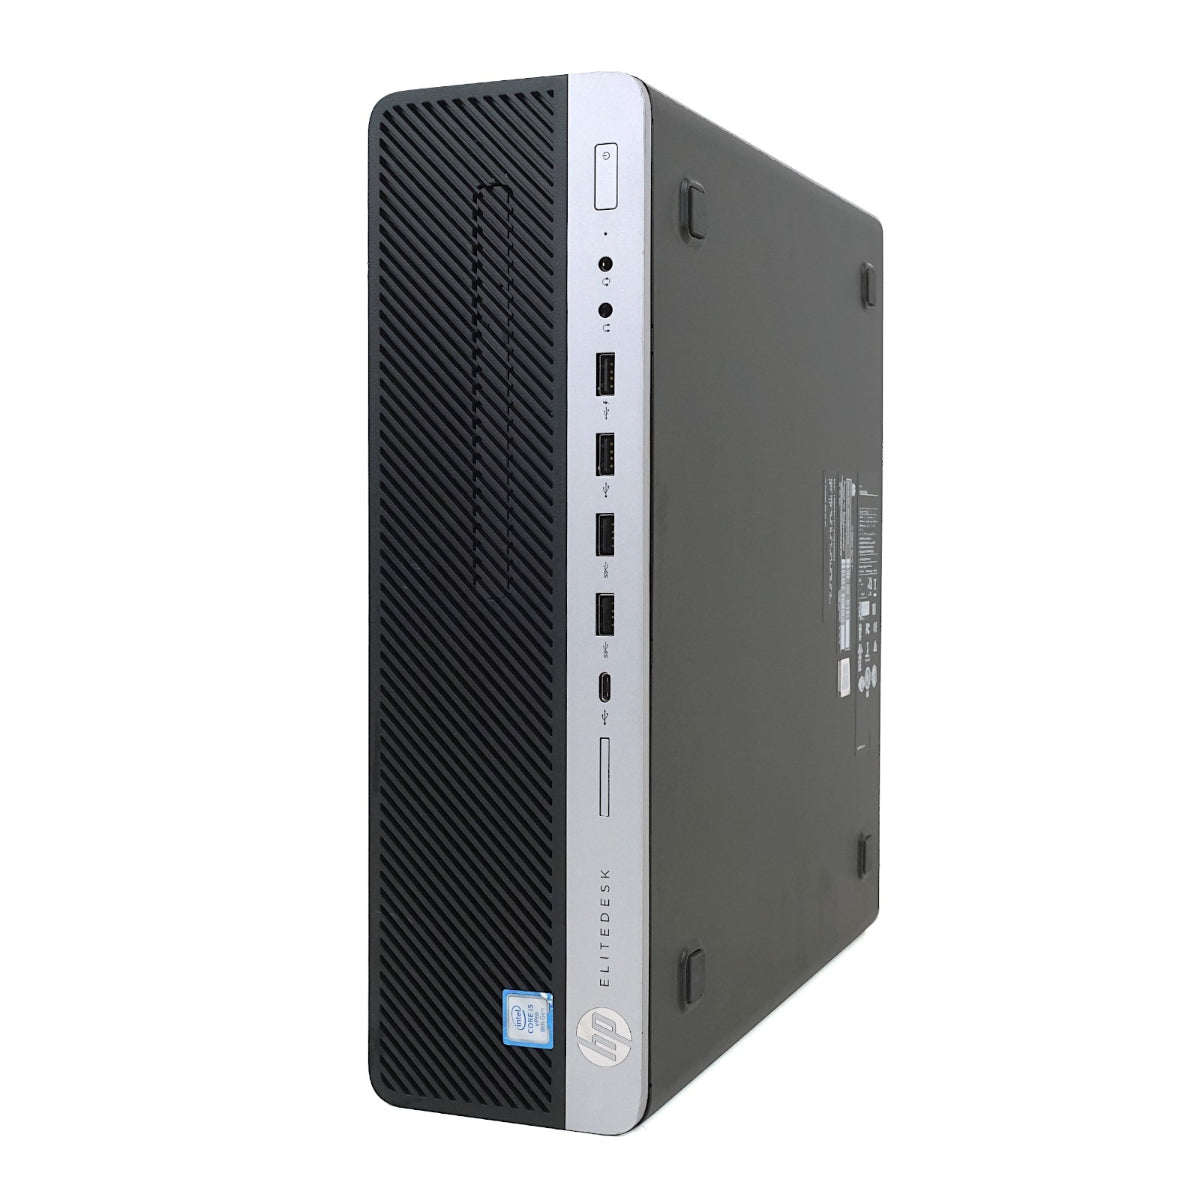 Hewlett Packard EliteDesk 800 G4 I5 8th Gen 3.0 Ghz Six Core PC + 22 Inch Monitor